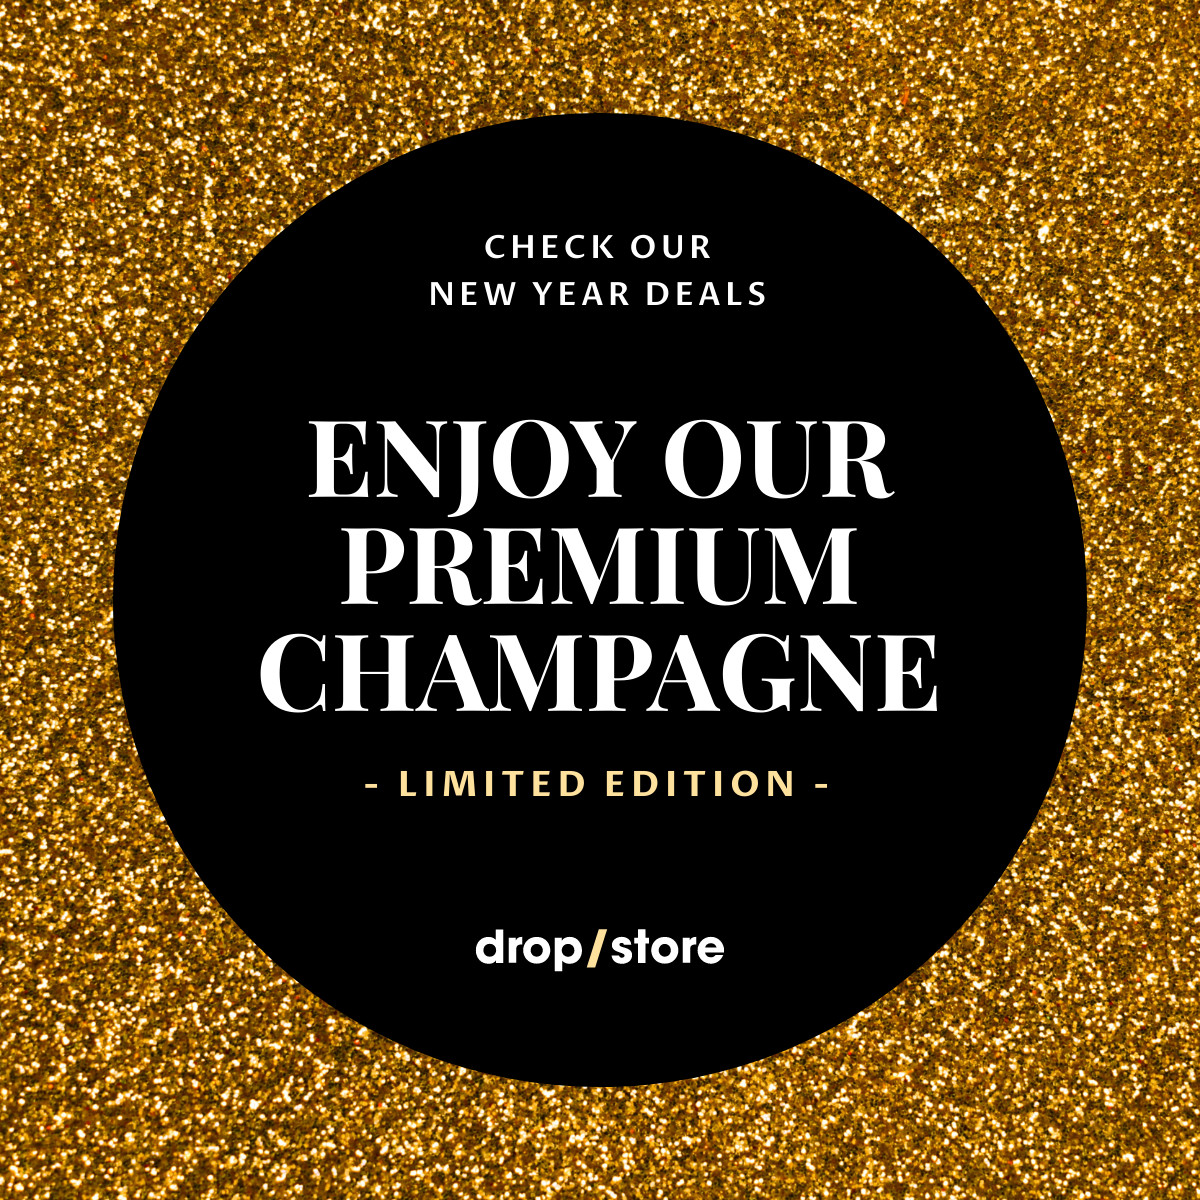 New Year Premium Champagne Deals Responsive Square Art 1200x1200